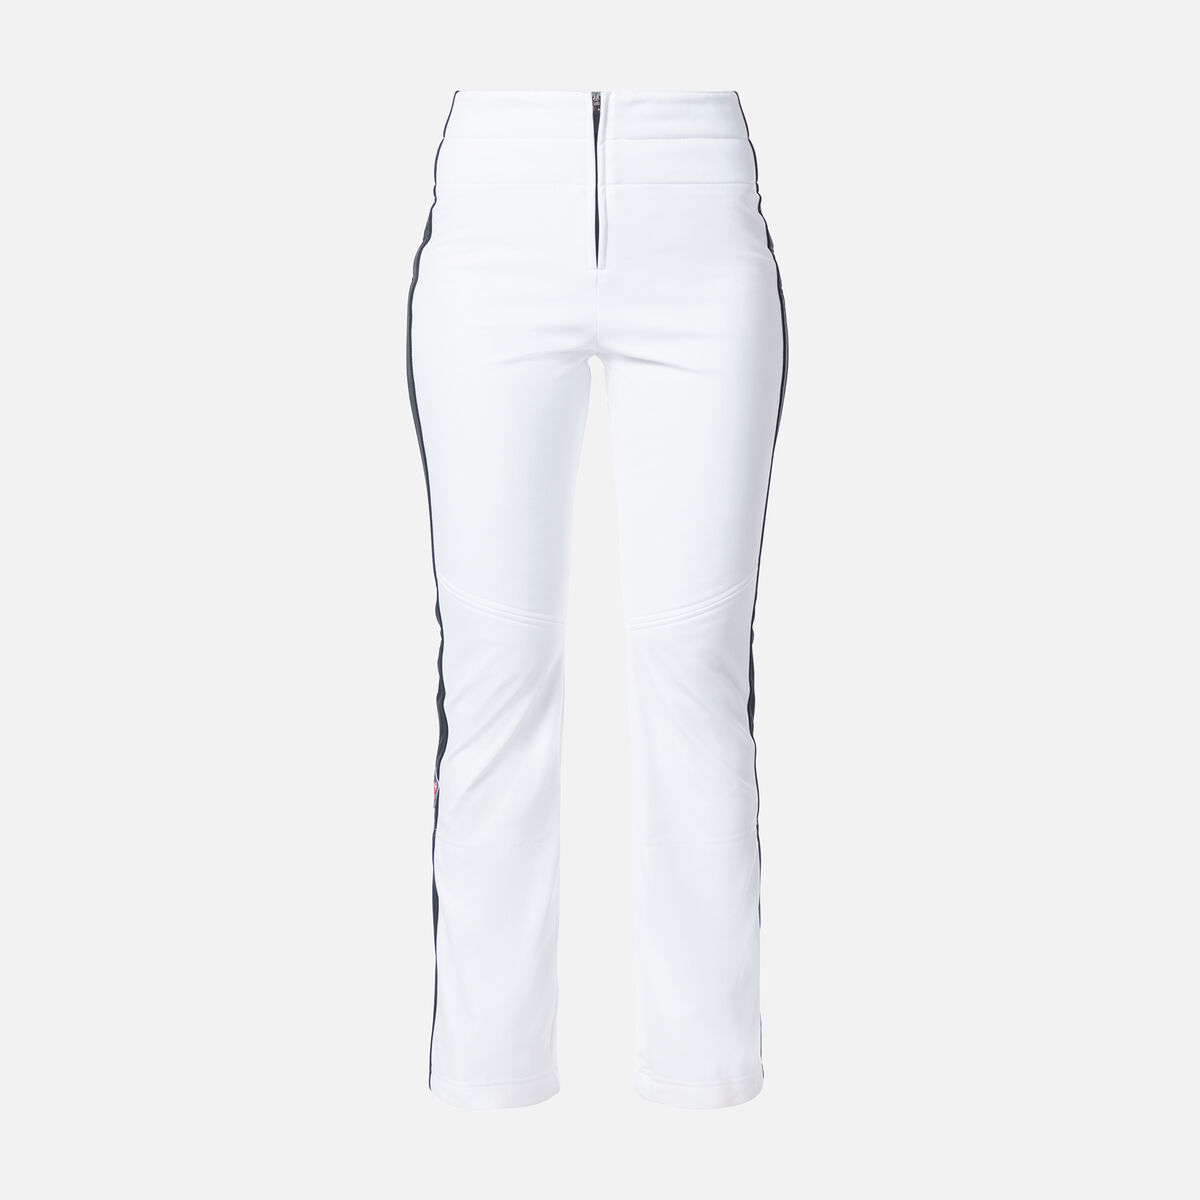 Rossignol Women's Resort Softshell Ski Pants white